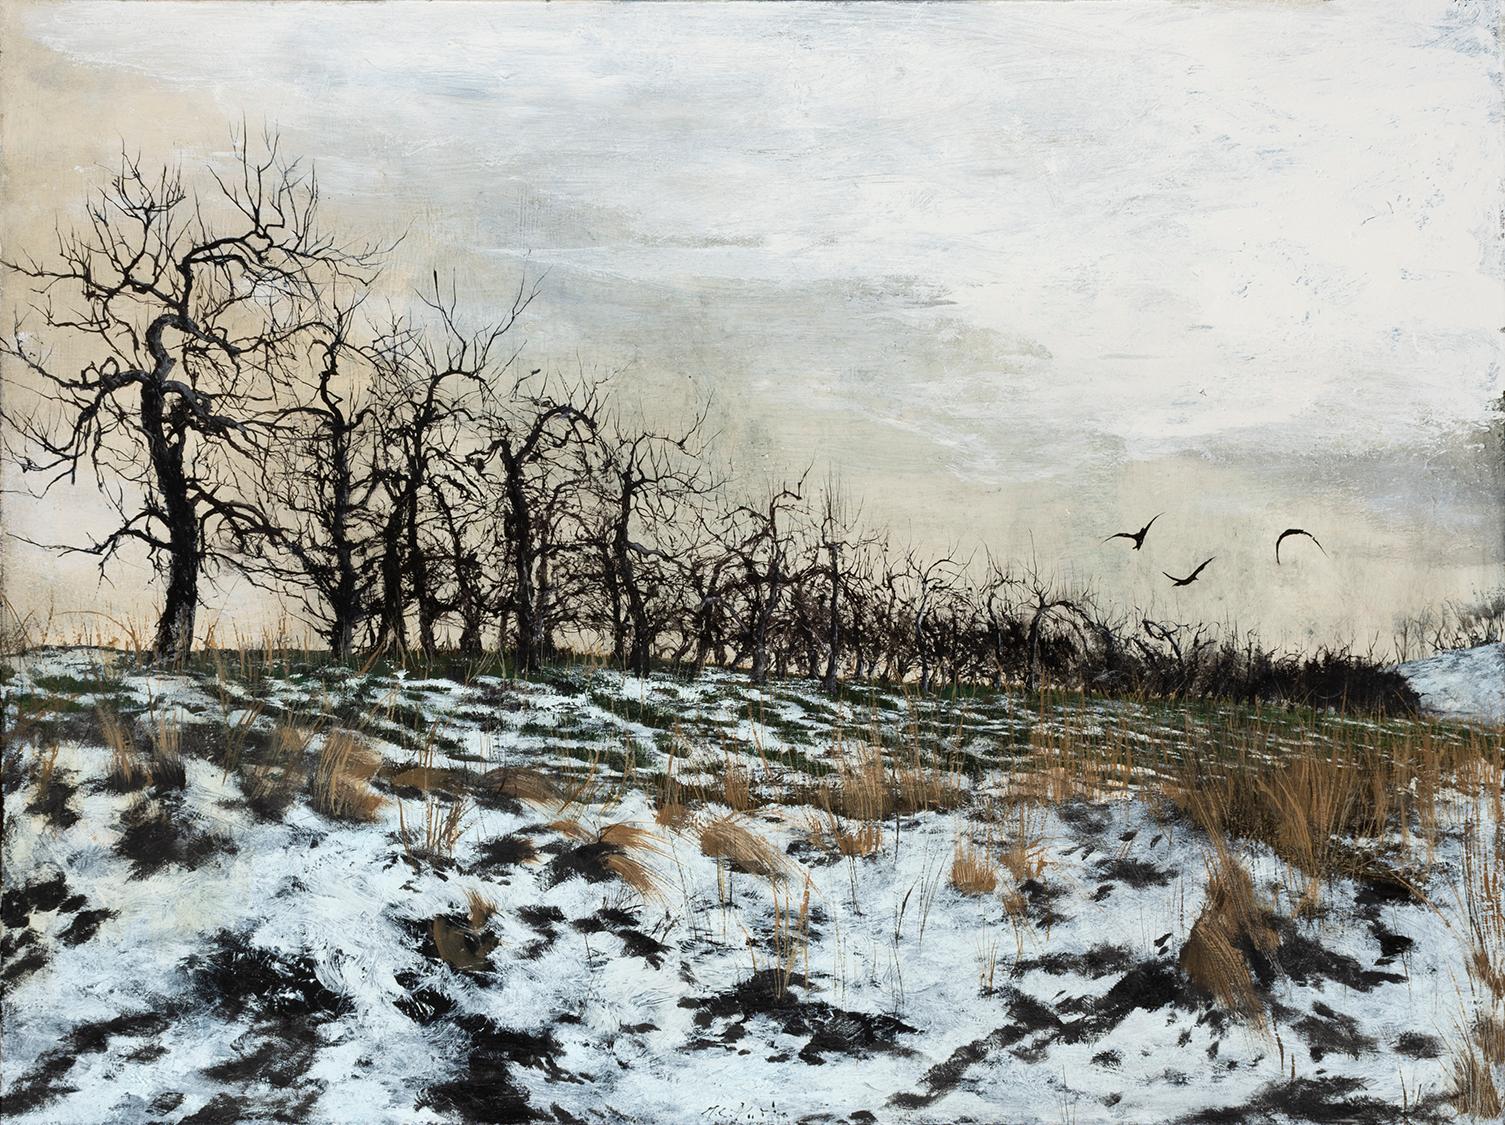 Landscape Painting Miles Cleveland Goodwin - Orchard avec foules